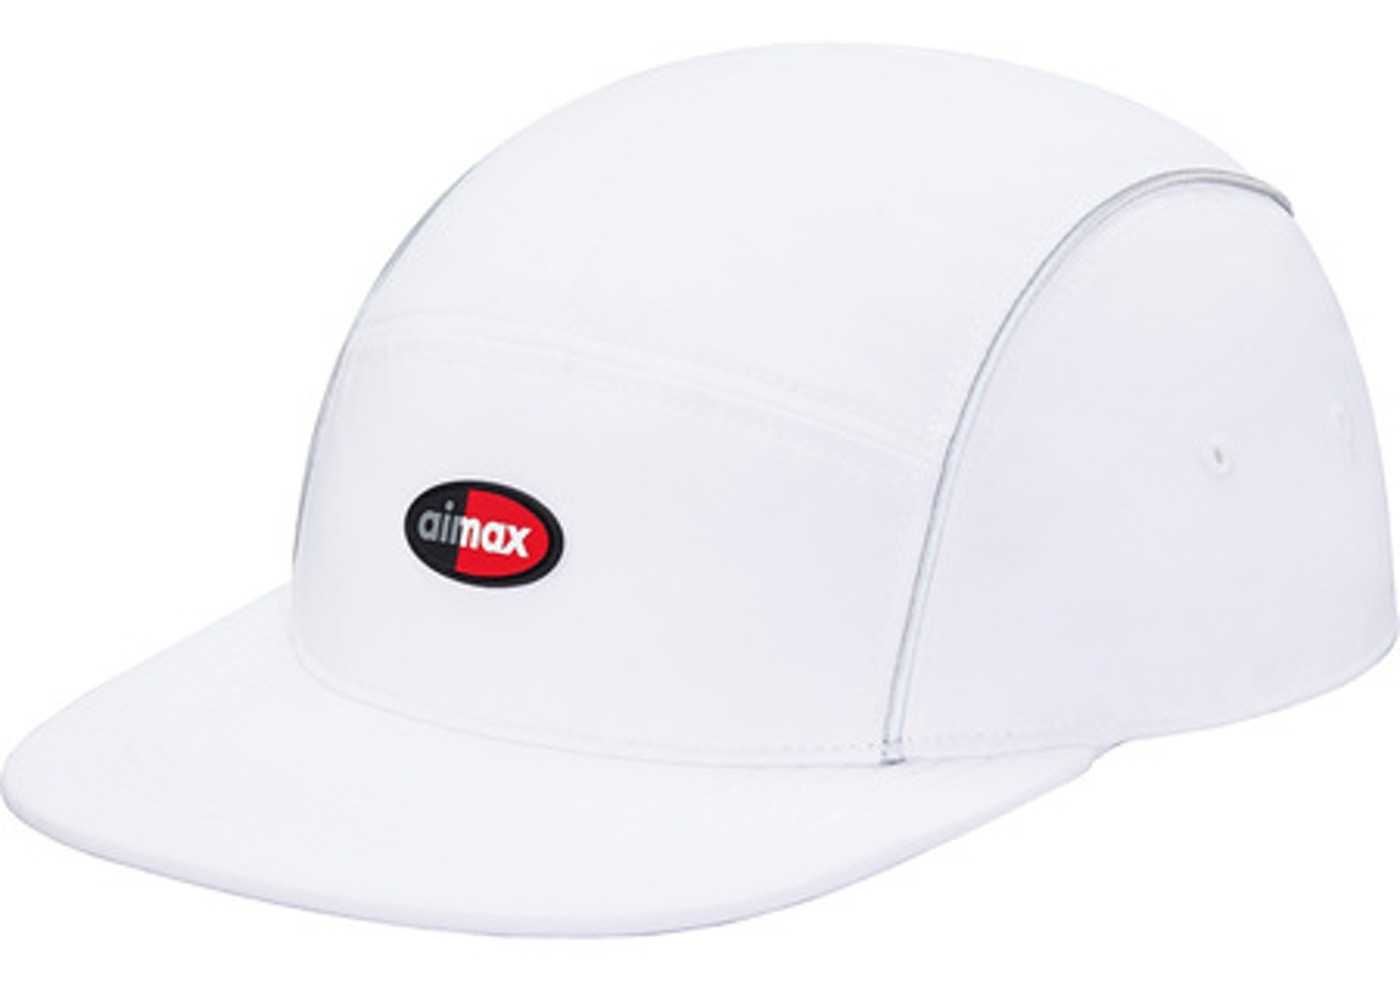 white nike air hat